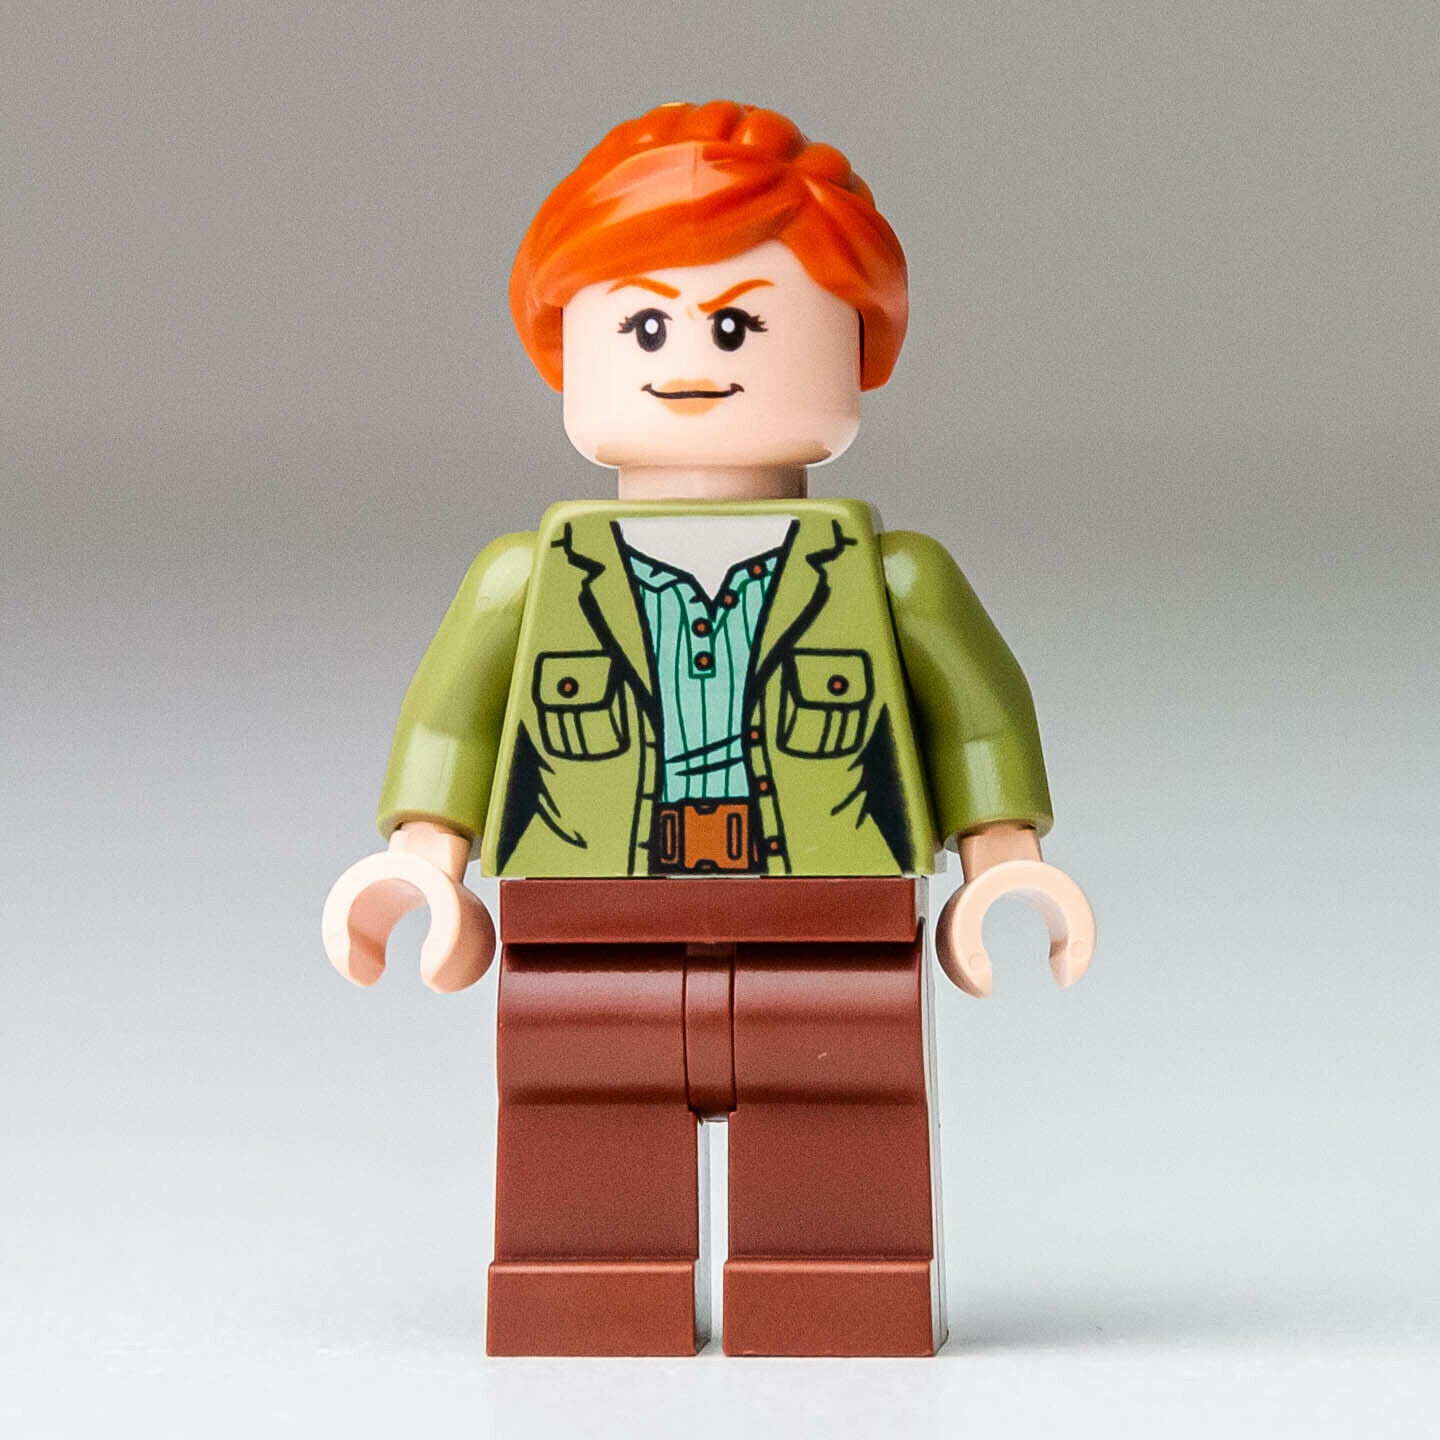 New LEGO Claire Dearing Minifigure - Jurassic World - 75940 (jw021)